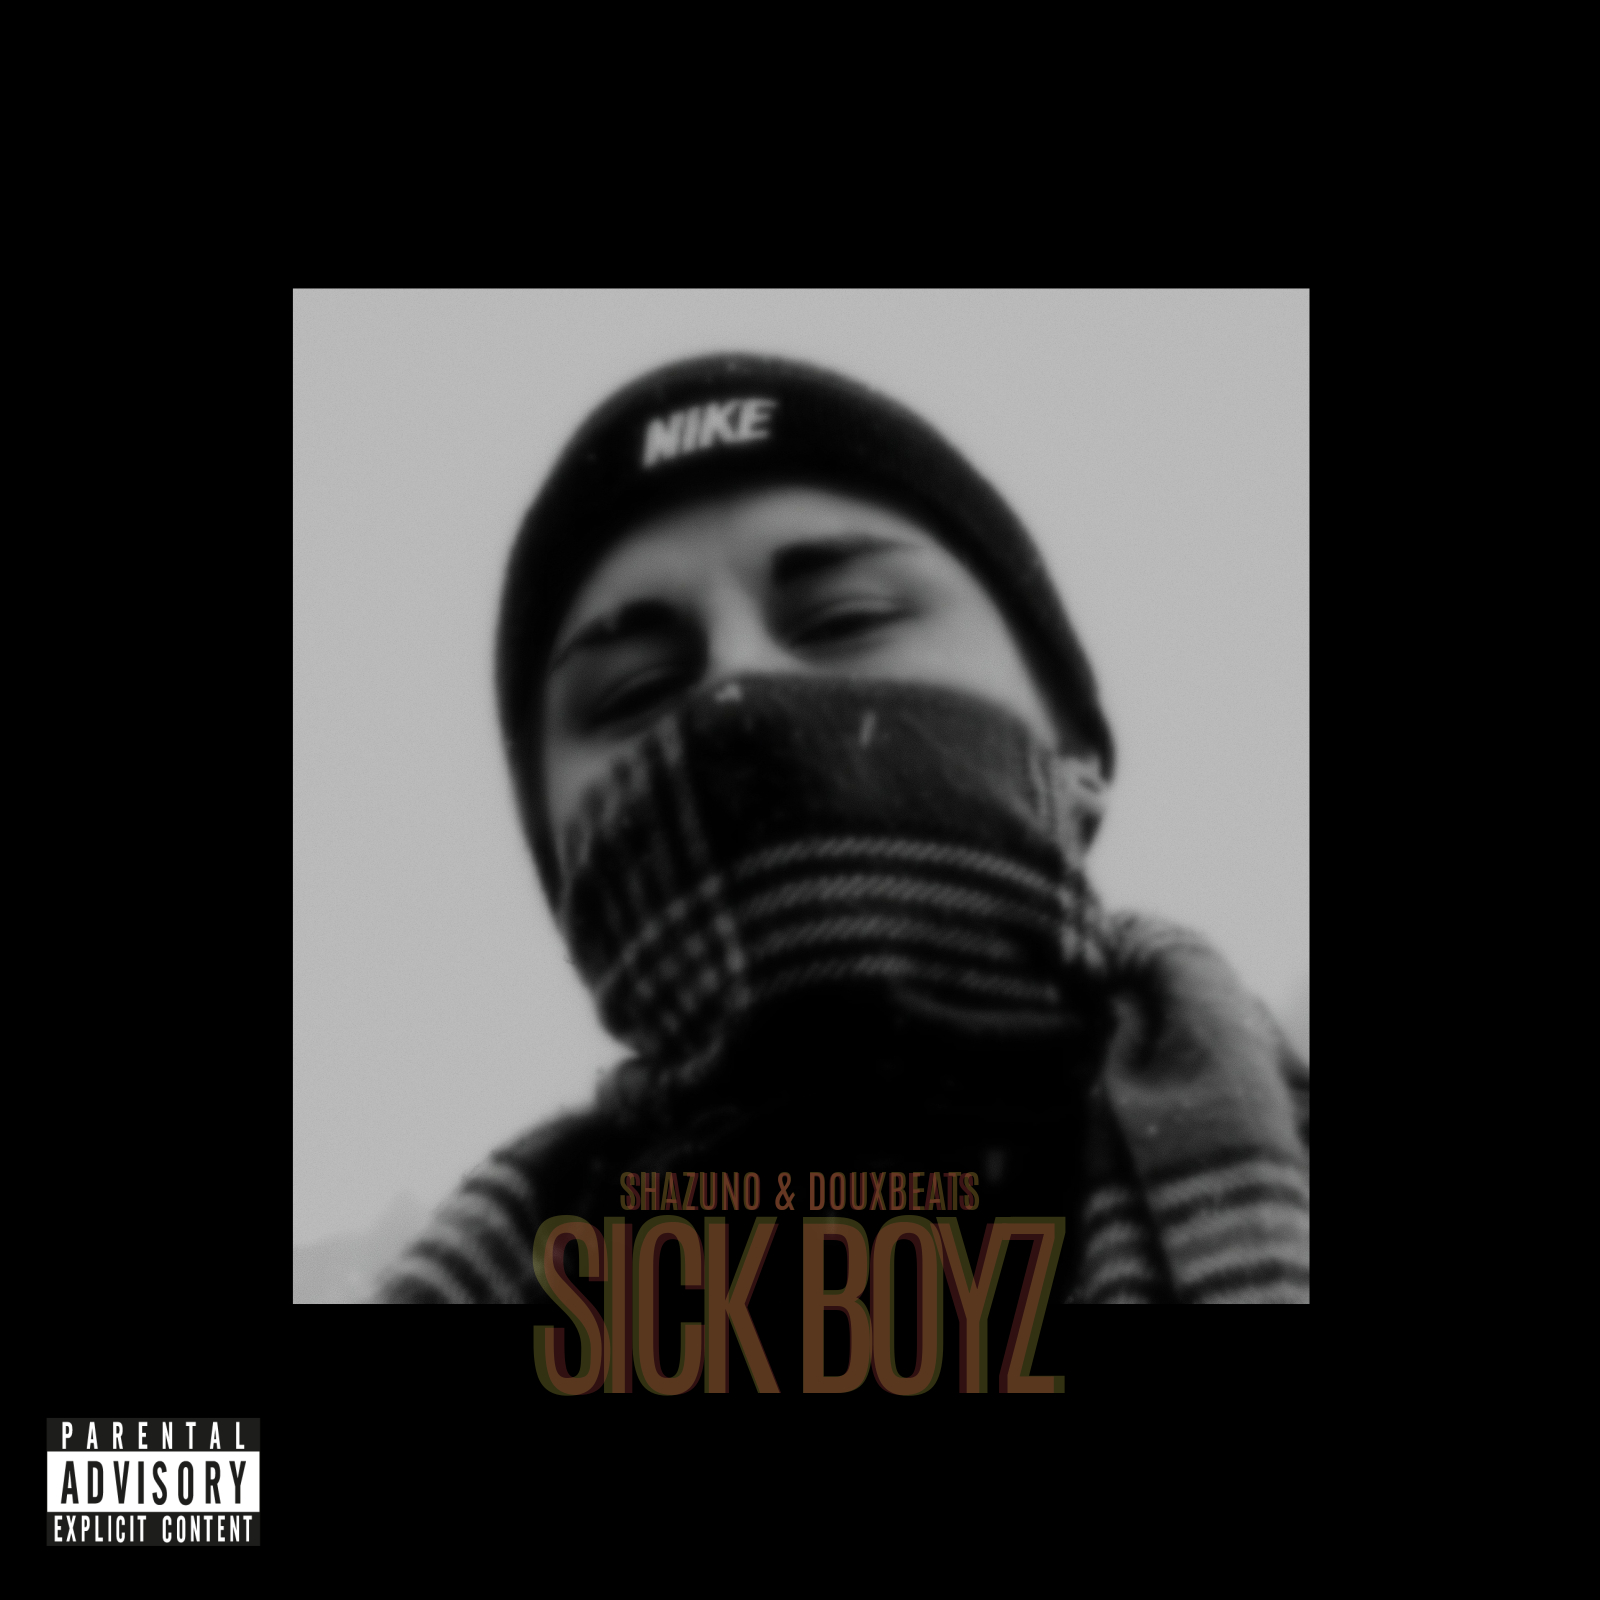 Sick_boyz_shazuno_doux_beats